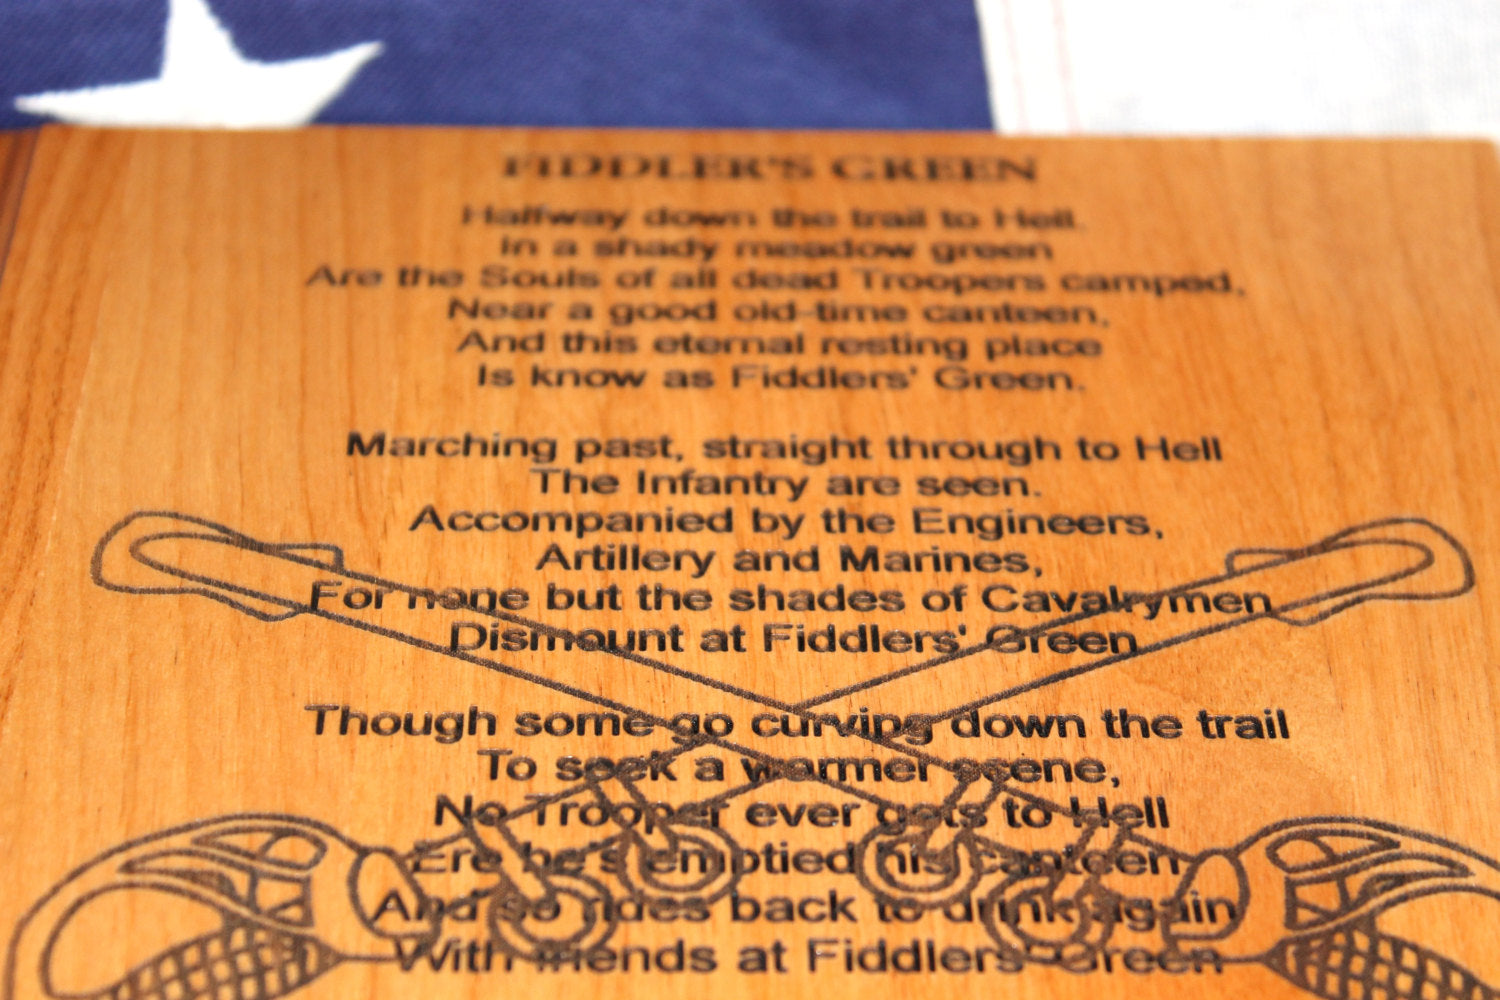 "Fiddlers’ Green" The Cavalrymen’s Poem